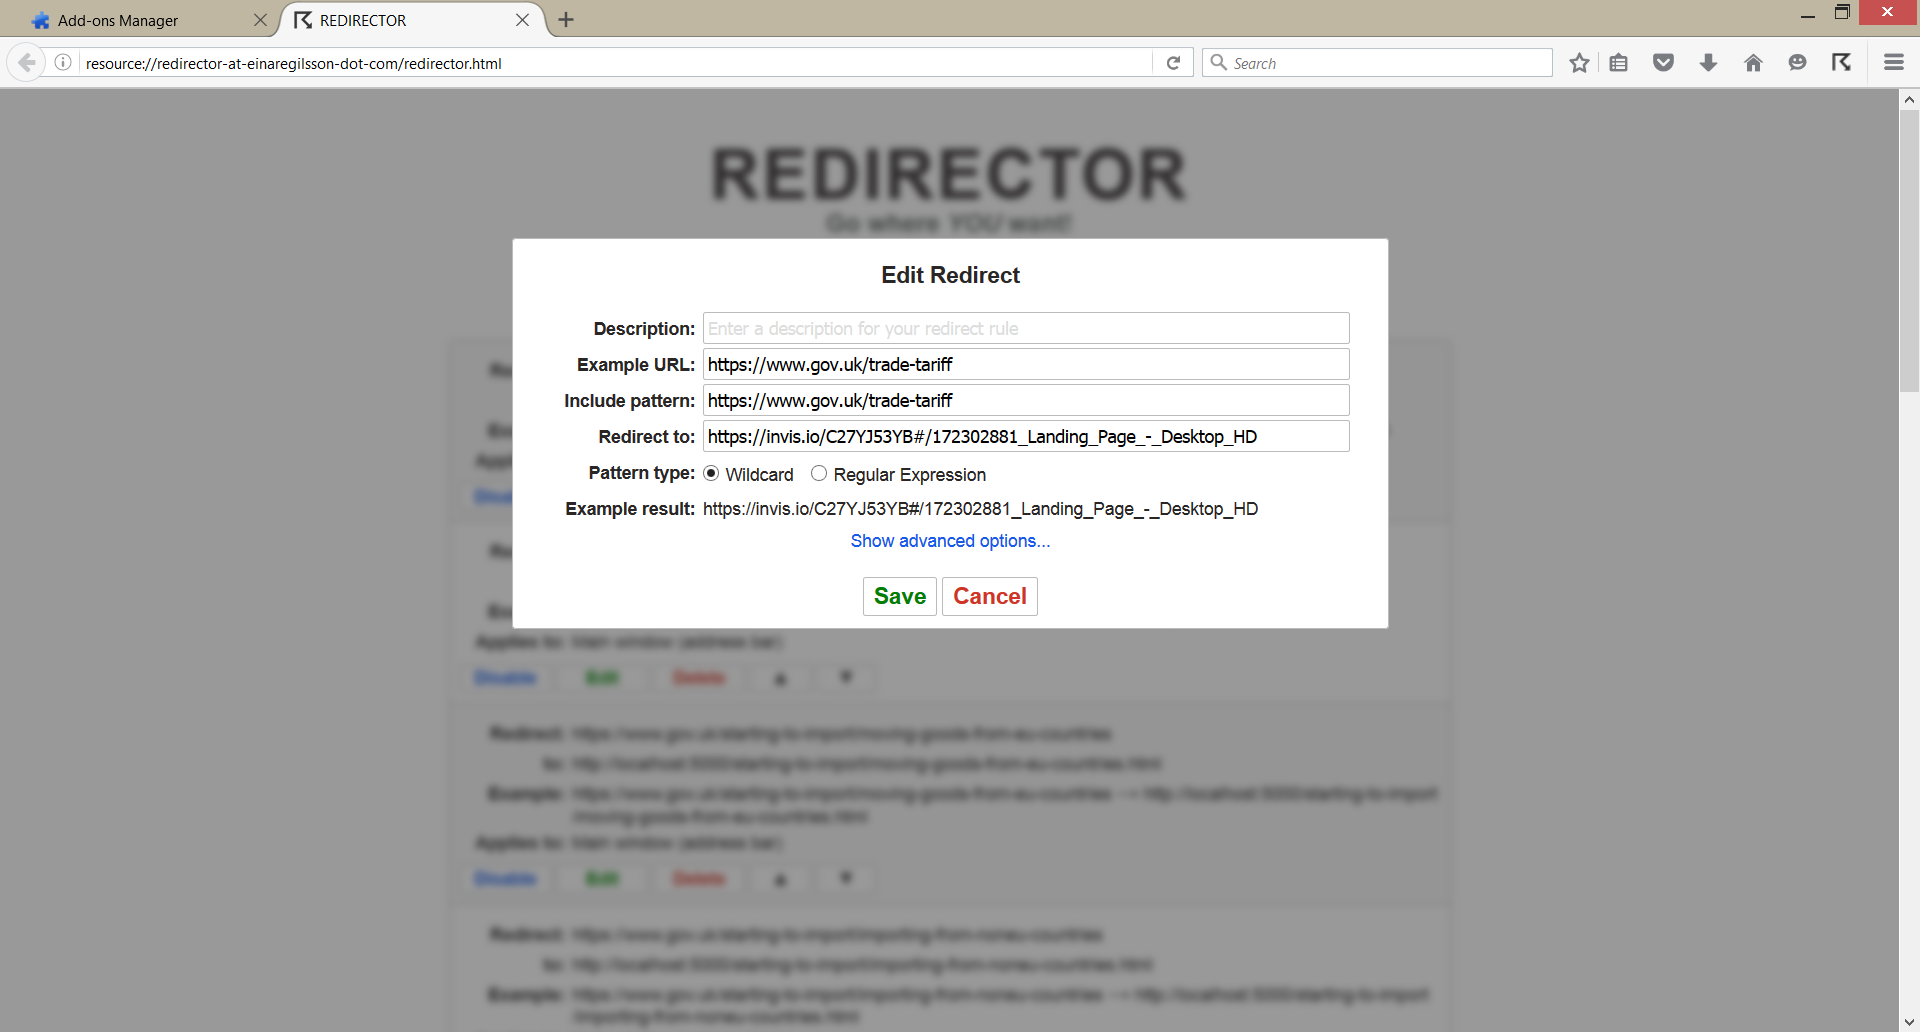 Redirector - Edit redirect